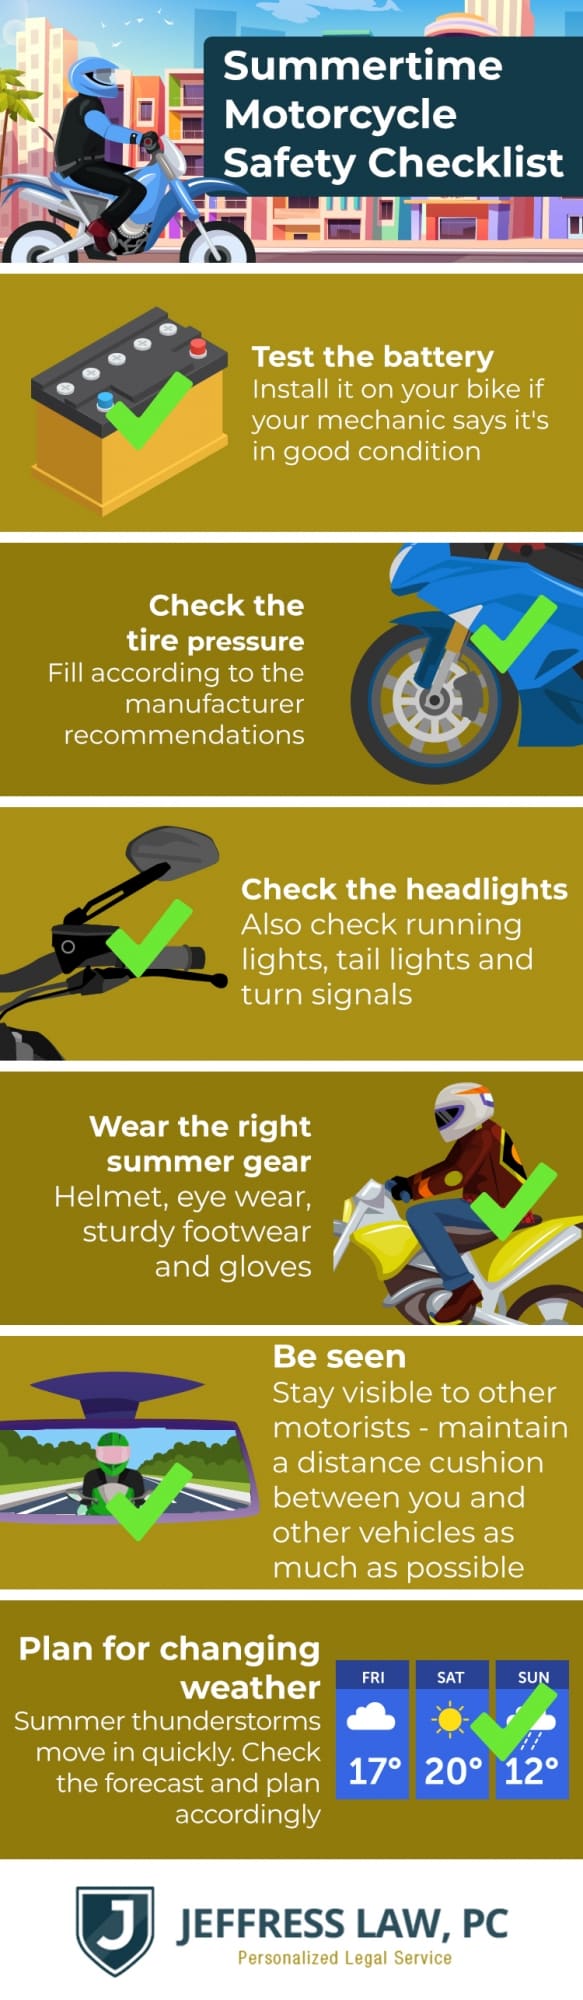 summertime motorcycle checklist jeffress law pc boulder CO